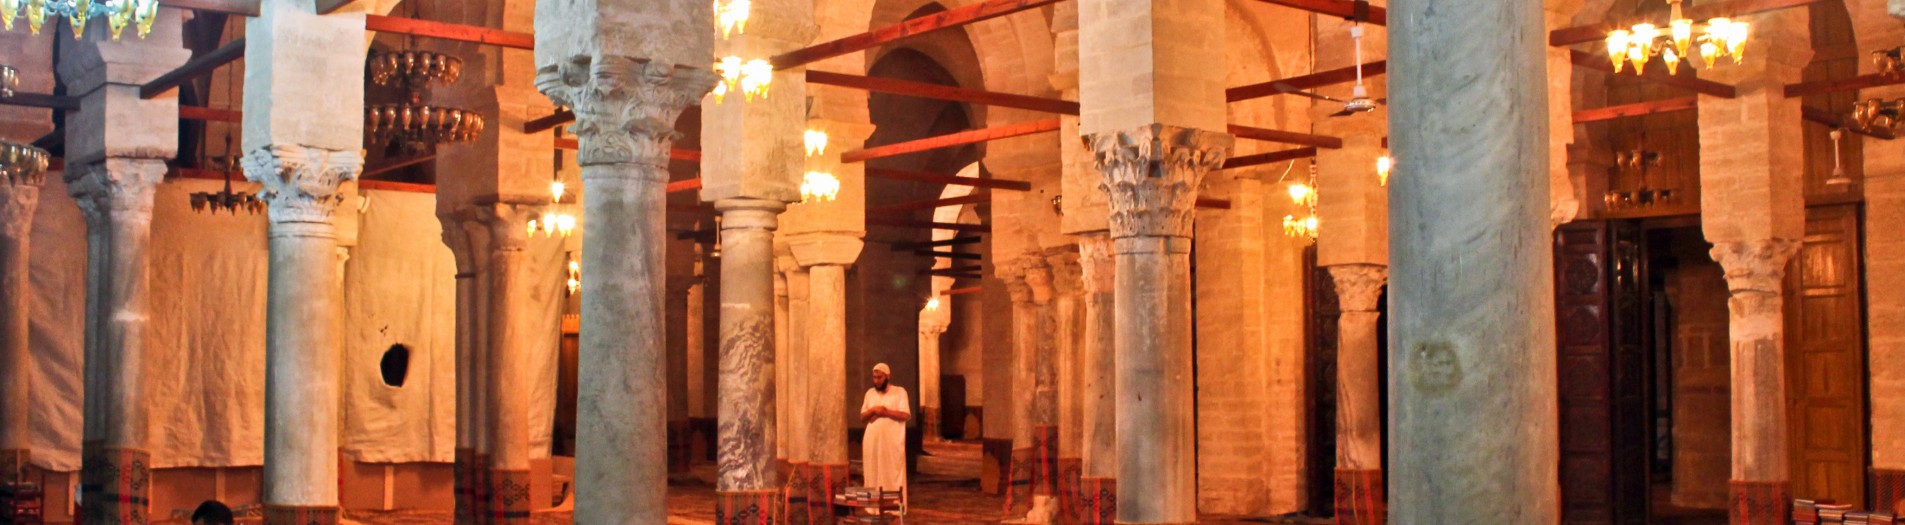 La grande mosquée de Sfax durant Ramadan